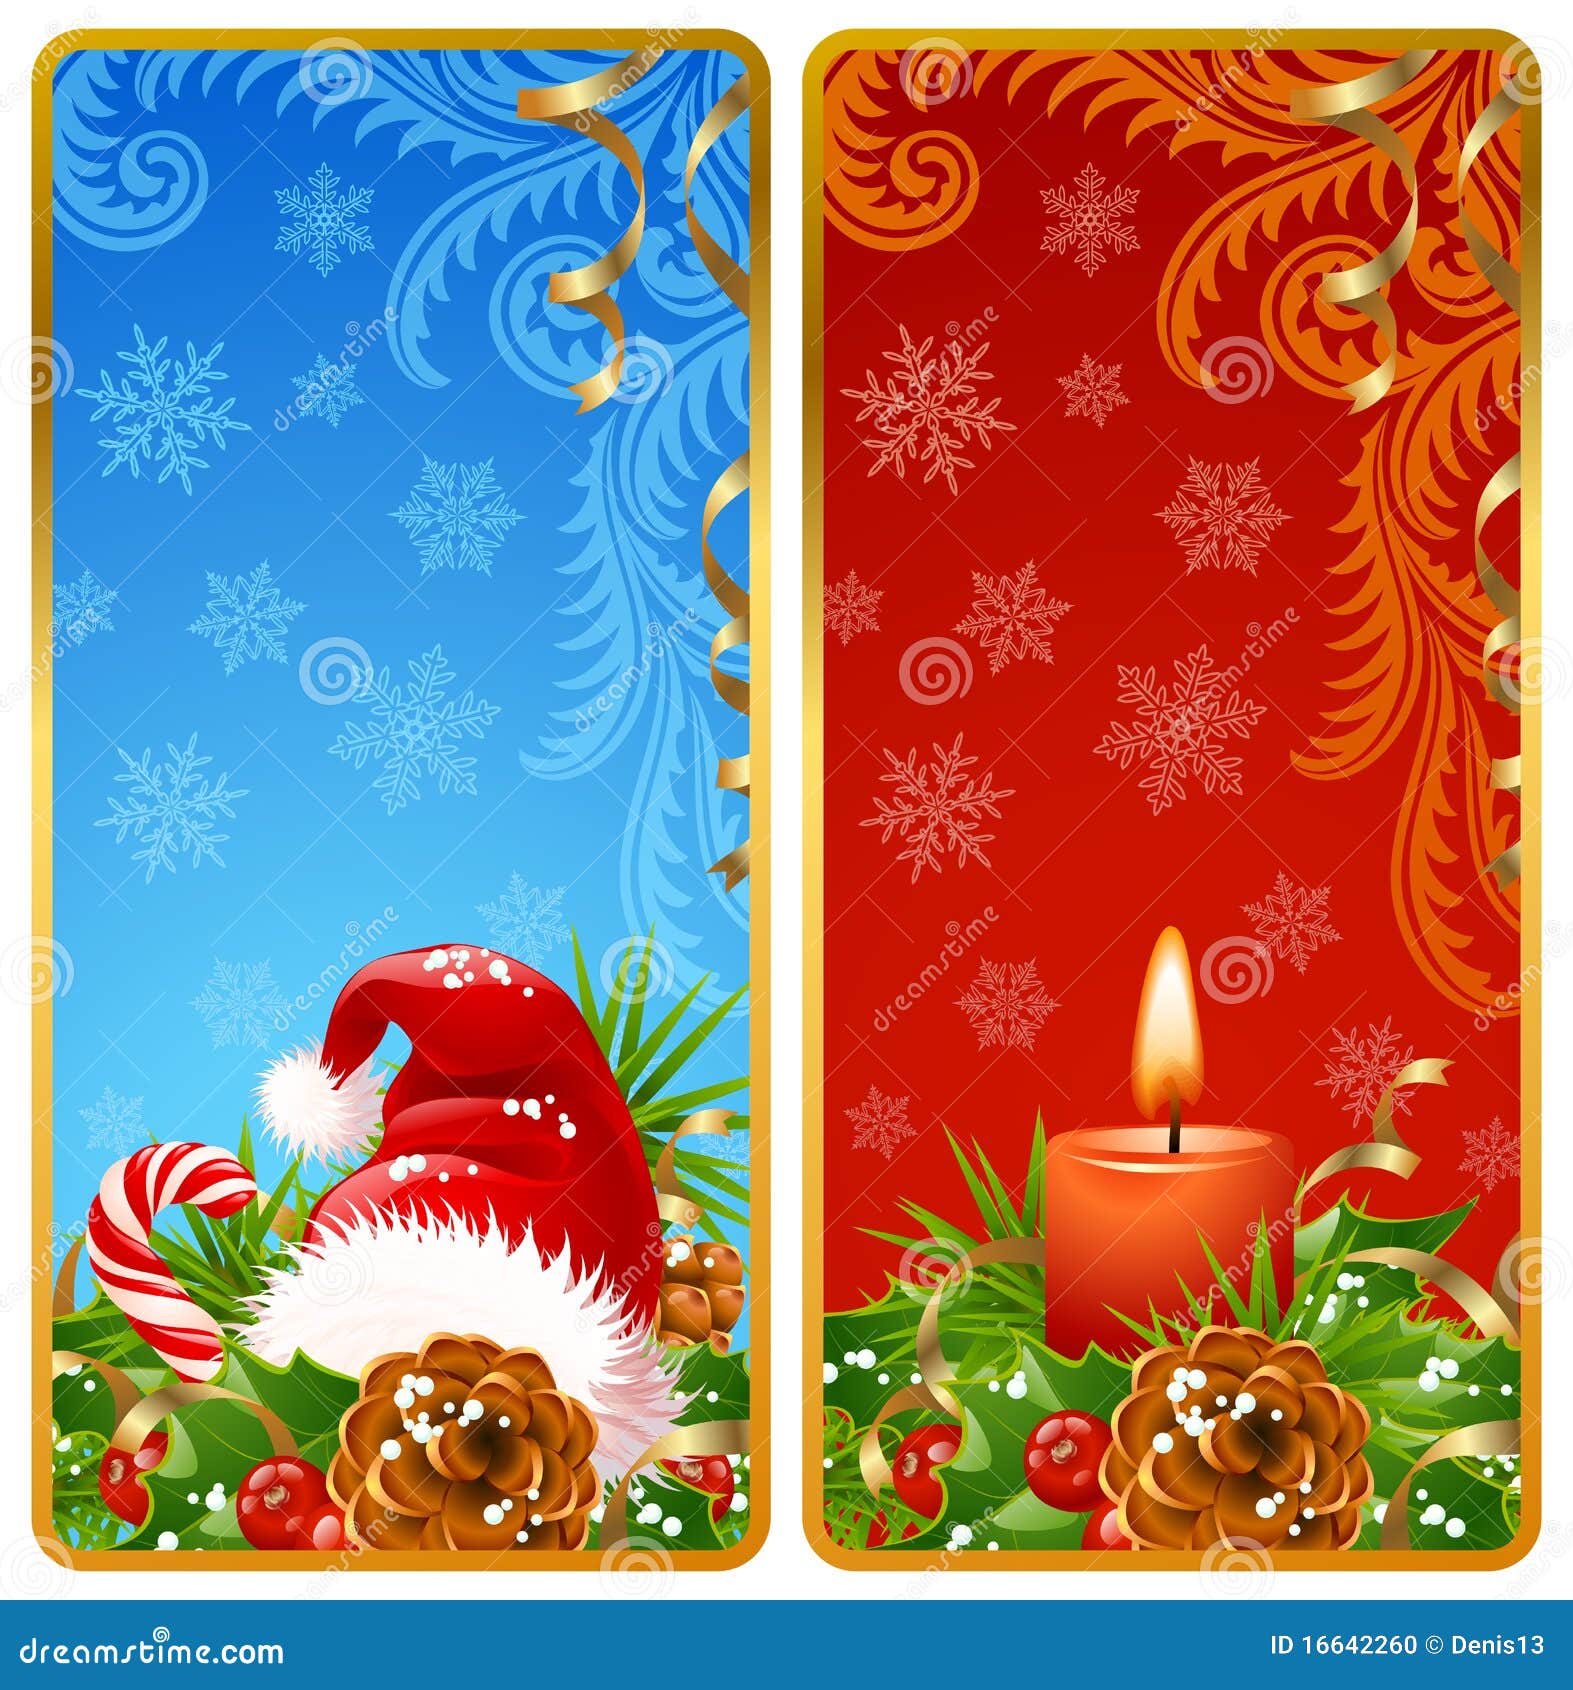 Sfondi Natalizi Verticali.Christmas Vertical Banners 2 Stock Vector Illustration Of Christmas Greeting 16642260